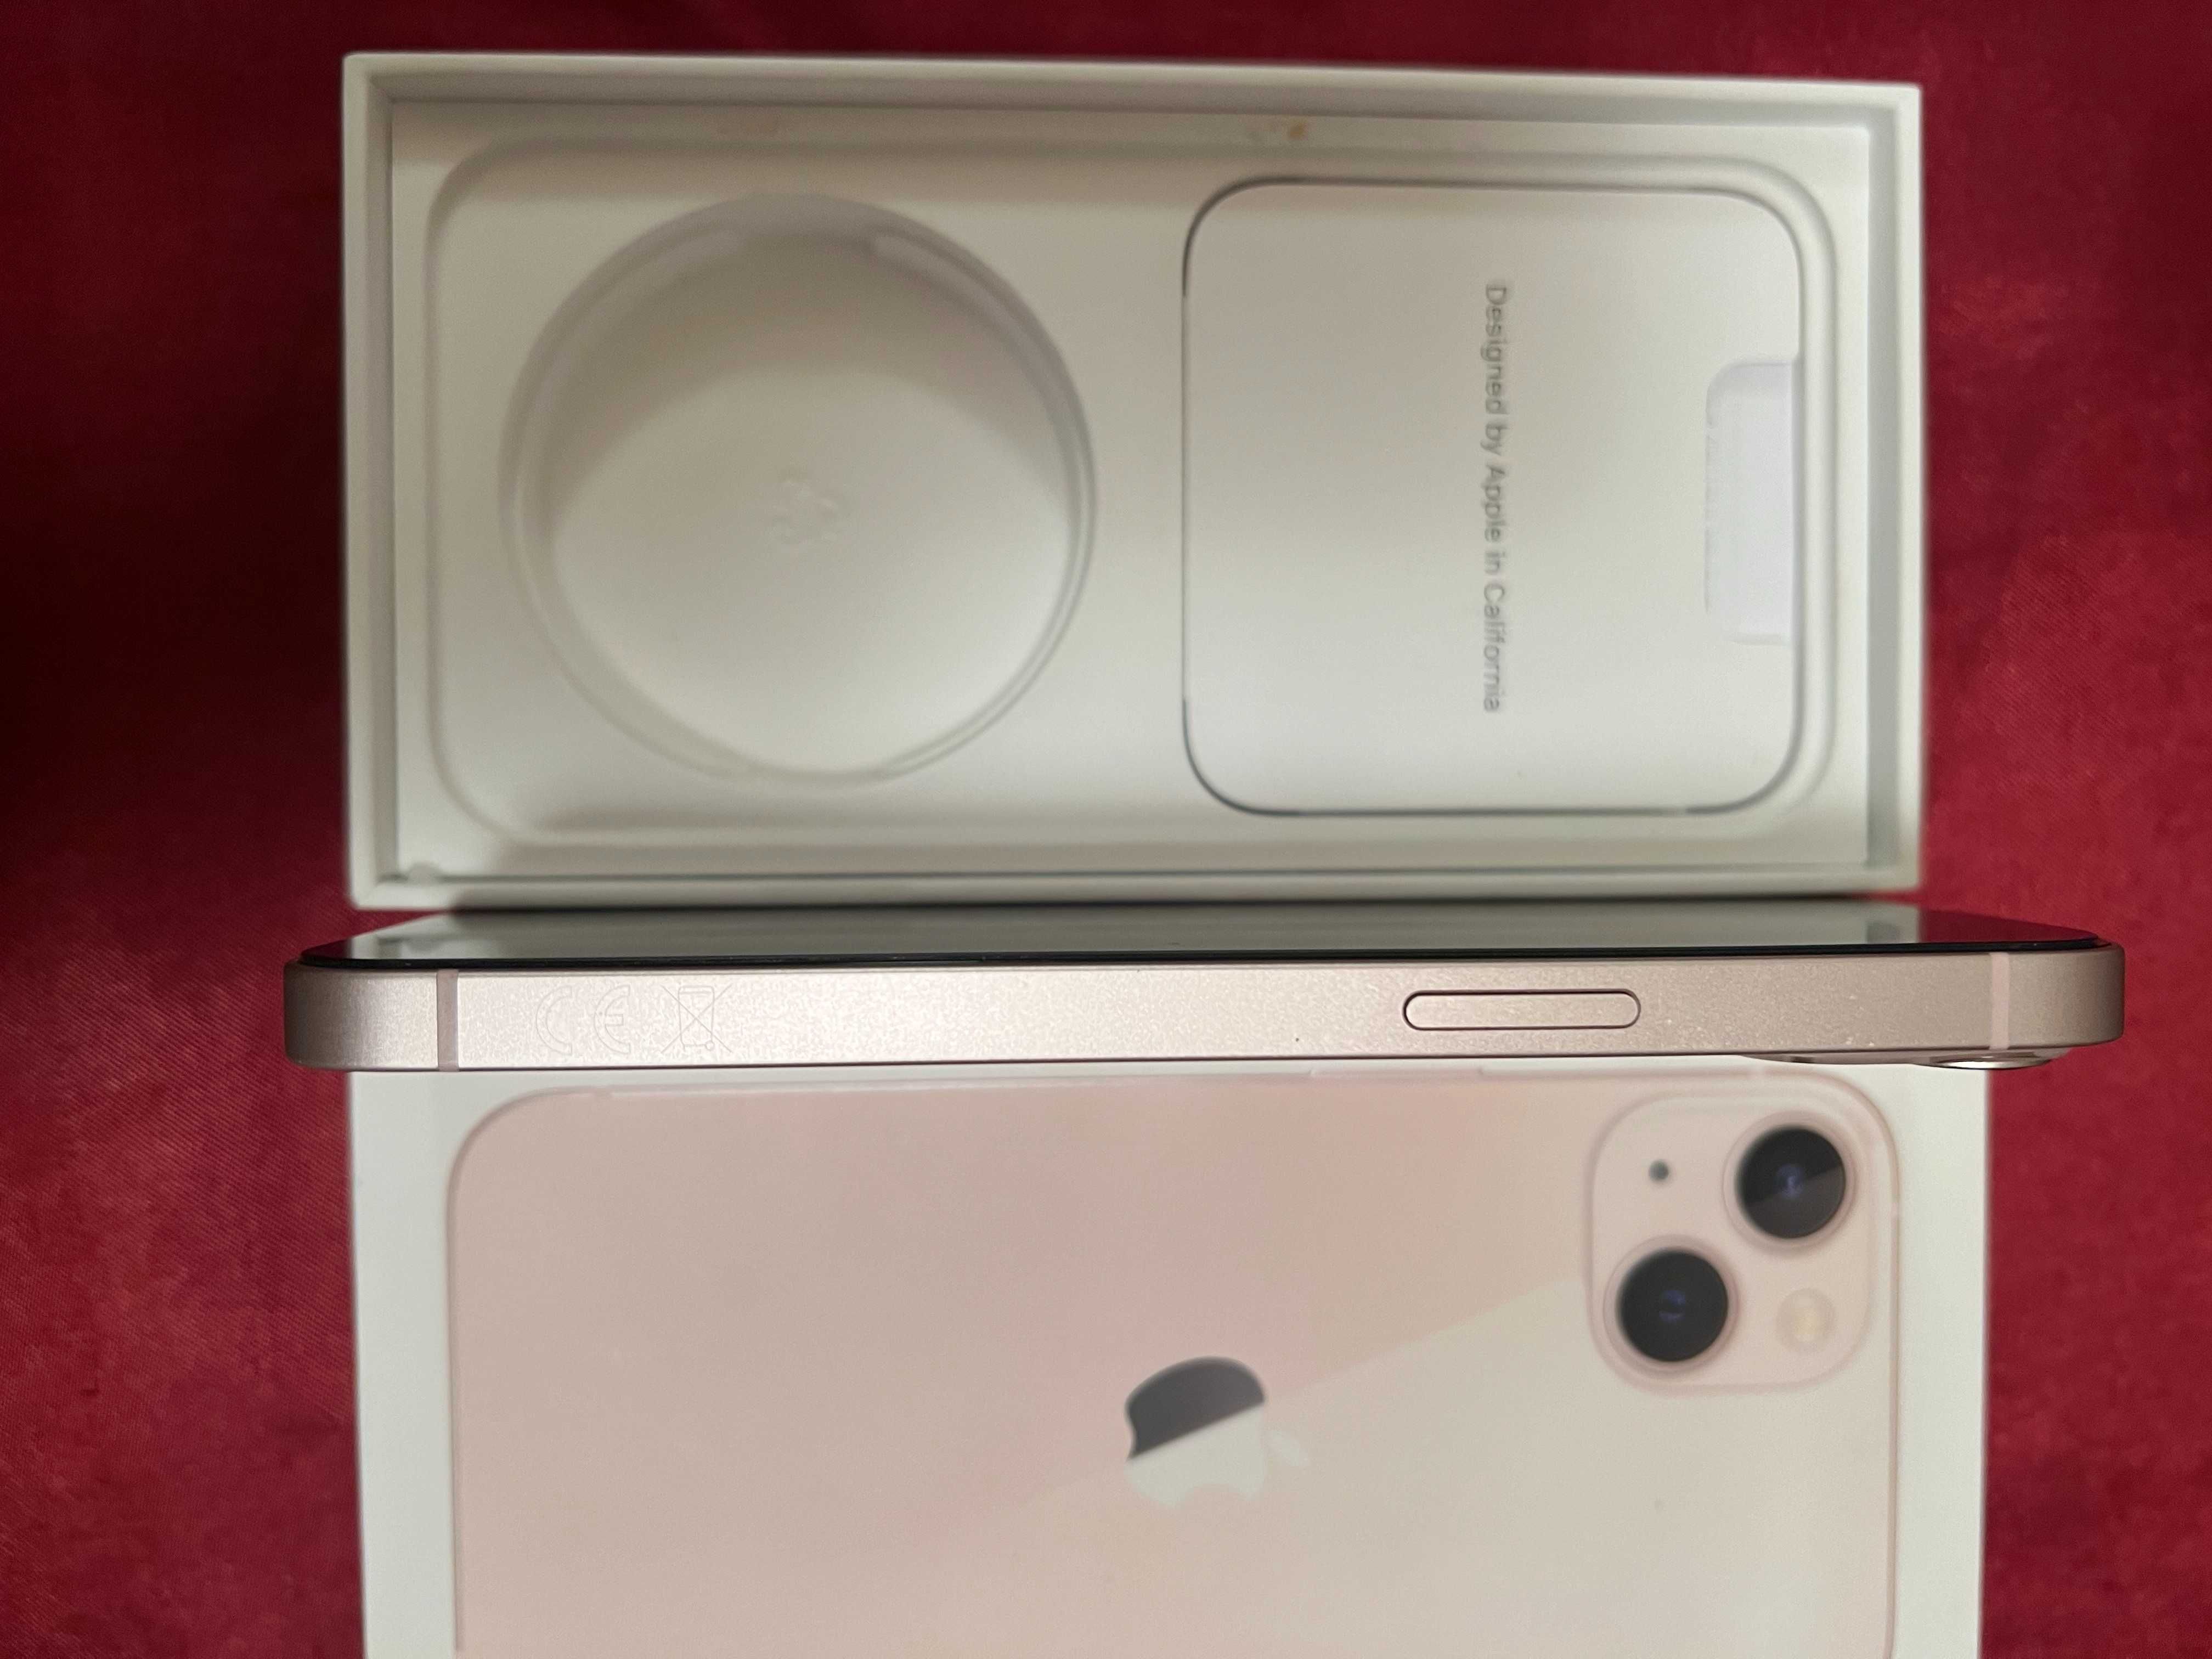 IPhone 13 128GB Pink